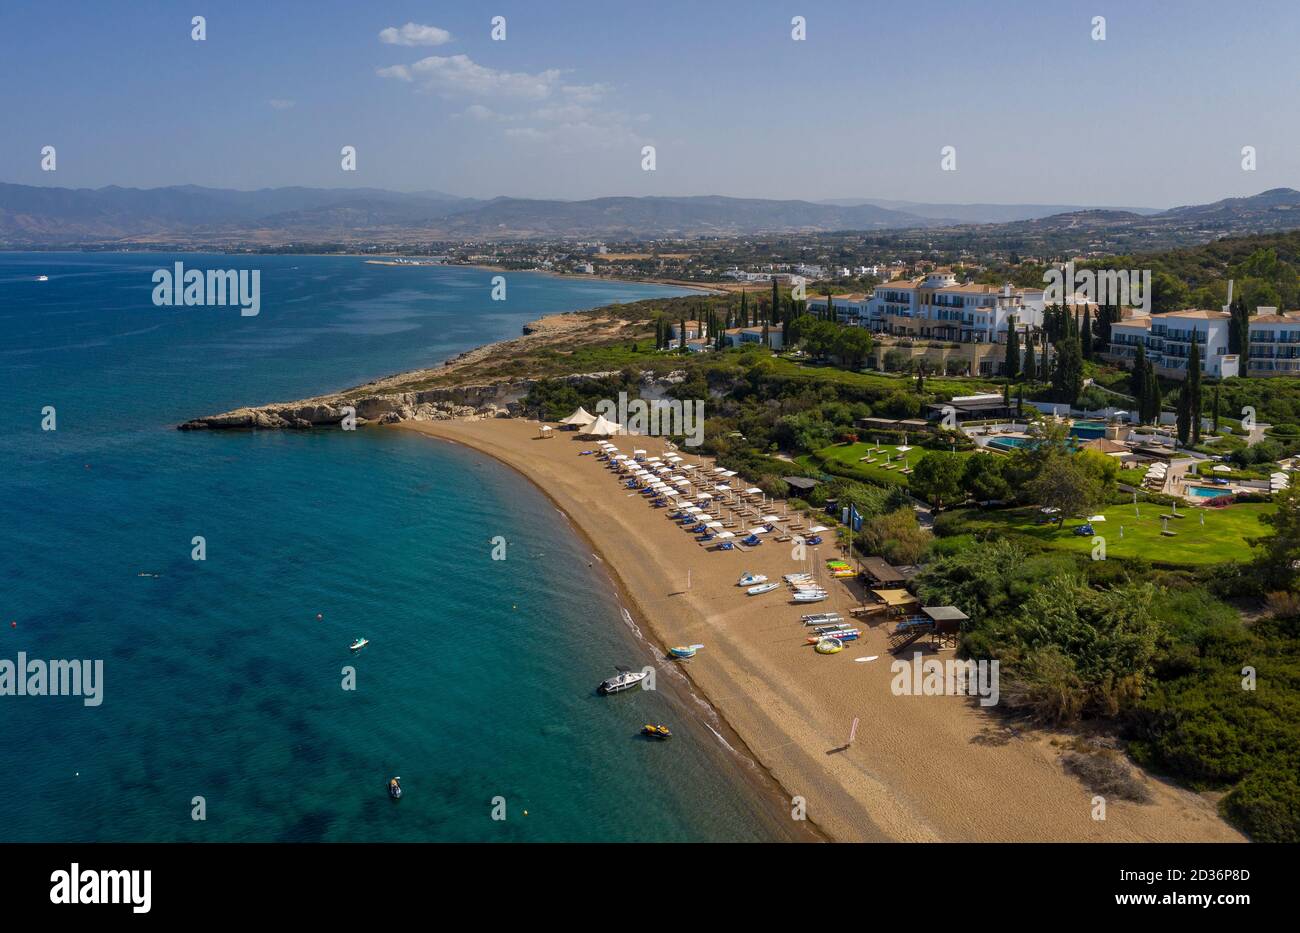 Aerial view of the Anassa Hotel and the Akamas peninsula coastline near Latchi, Cyprus. Stock Photo